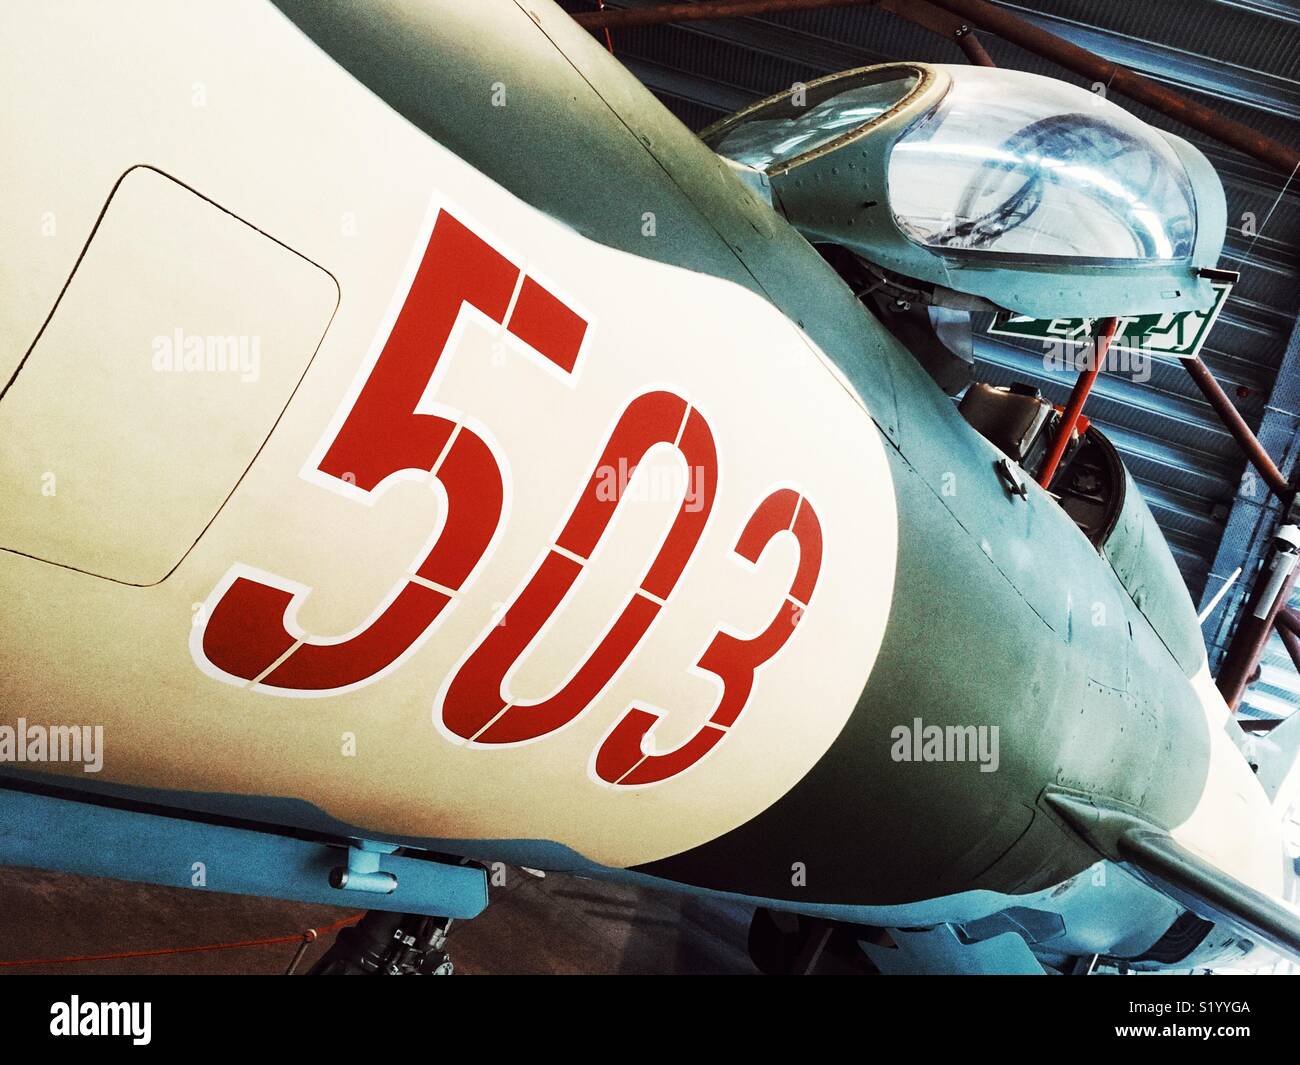 Soviet Mig 21 jet fighter Stock Photo